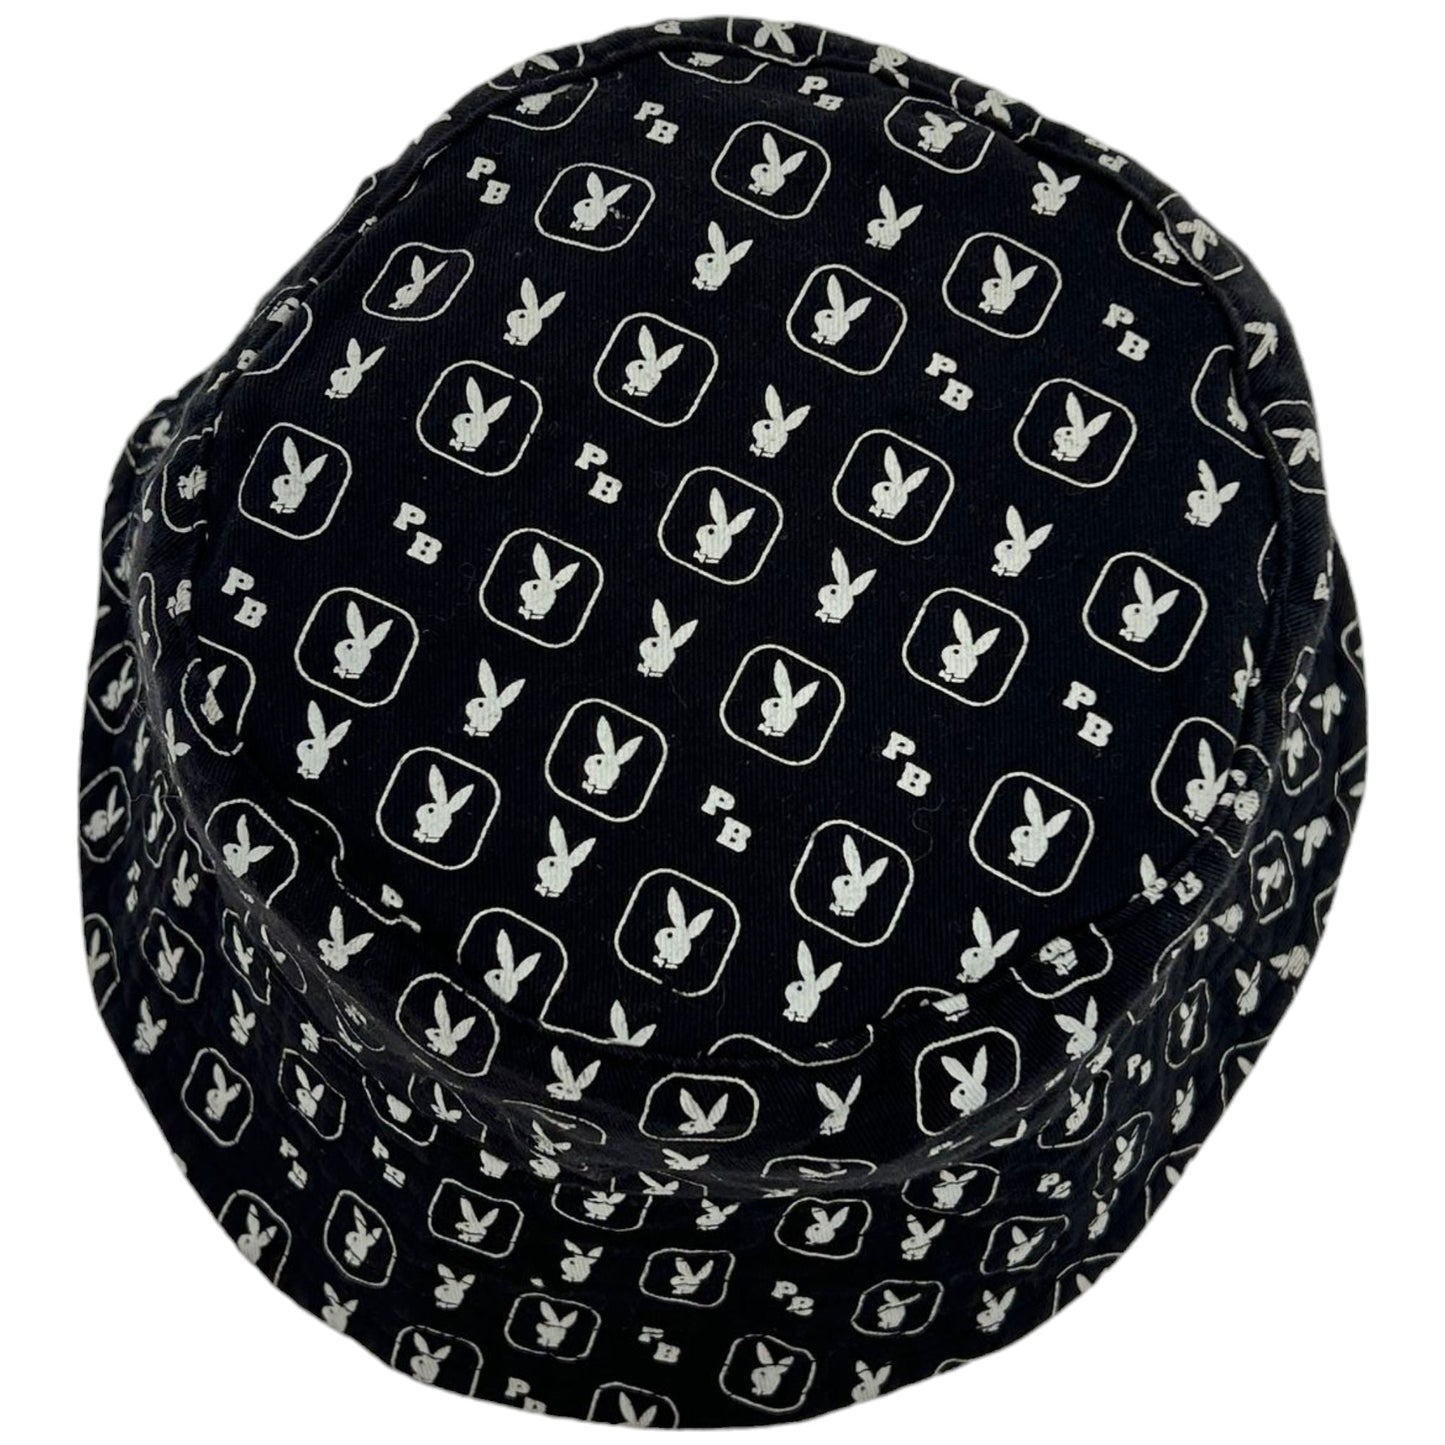 Vintage Playboy Monogram Logo Bucket Hat